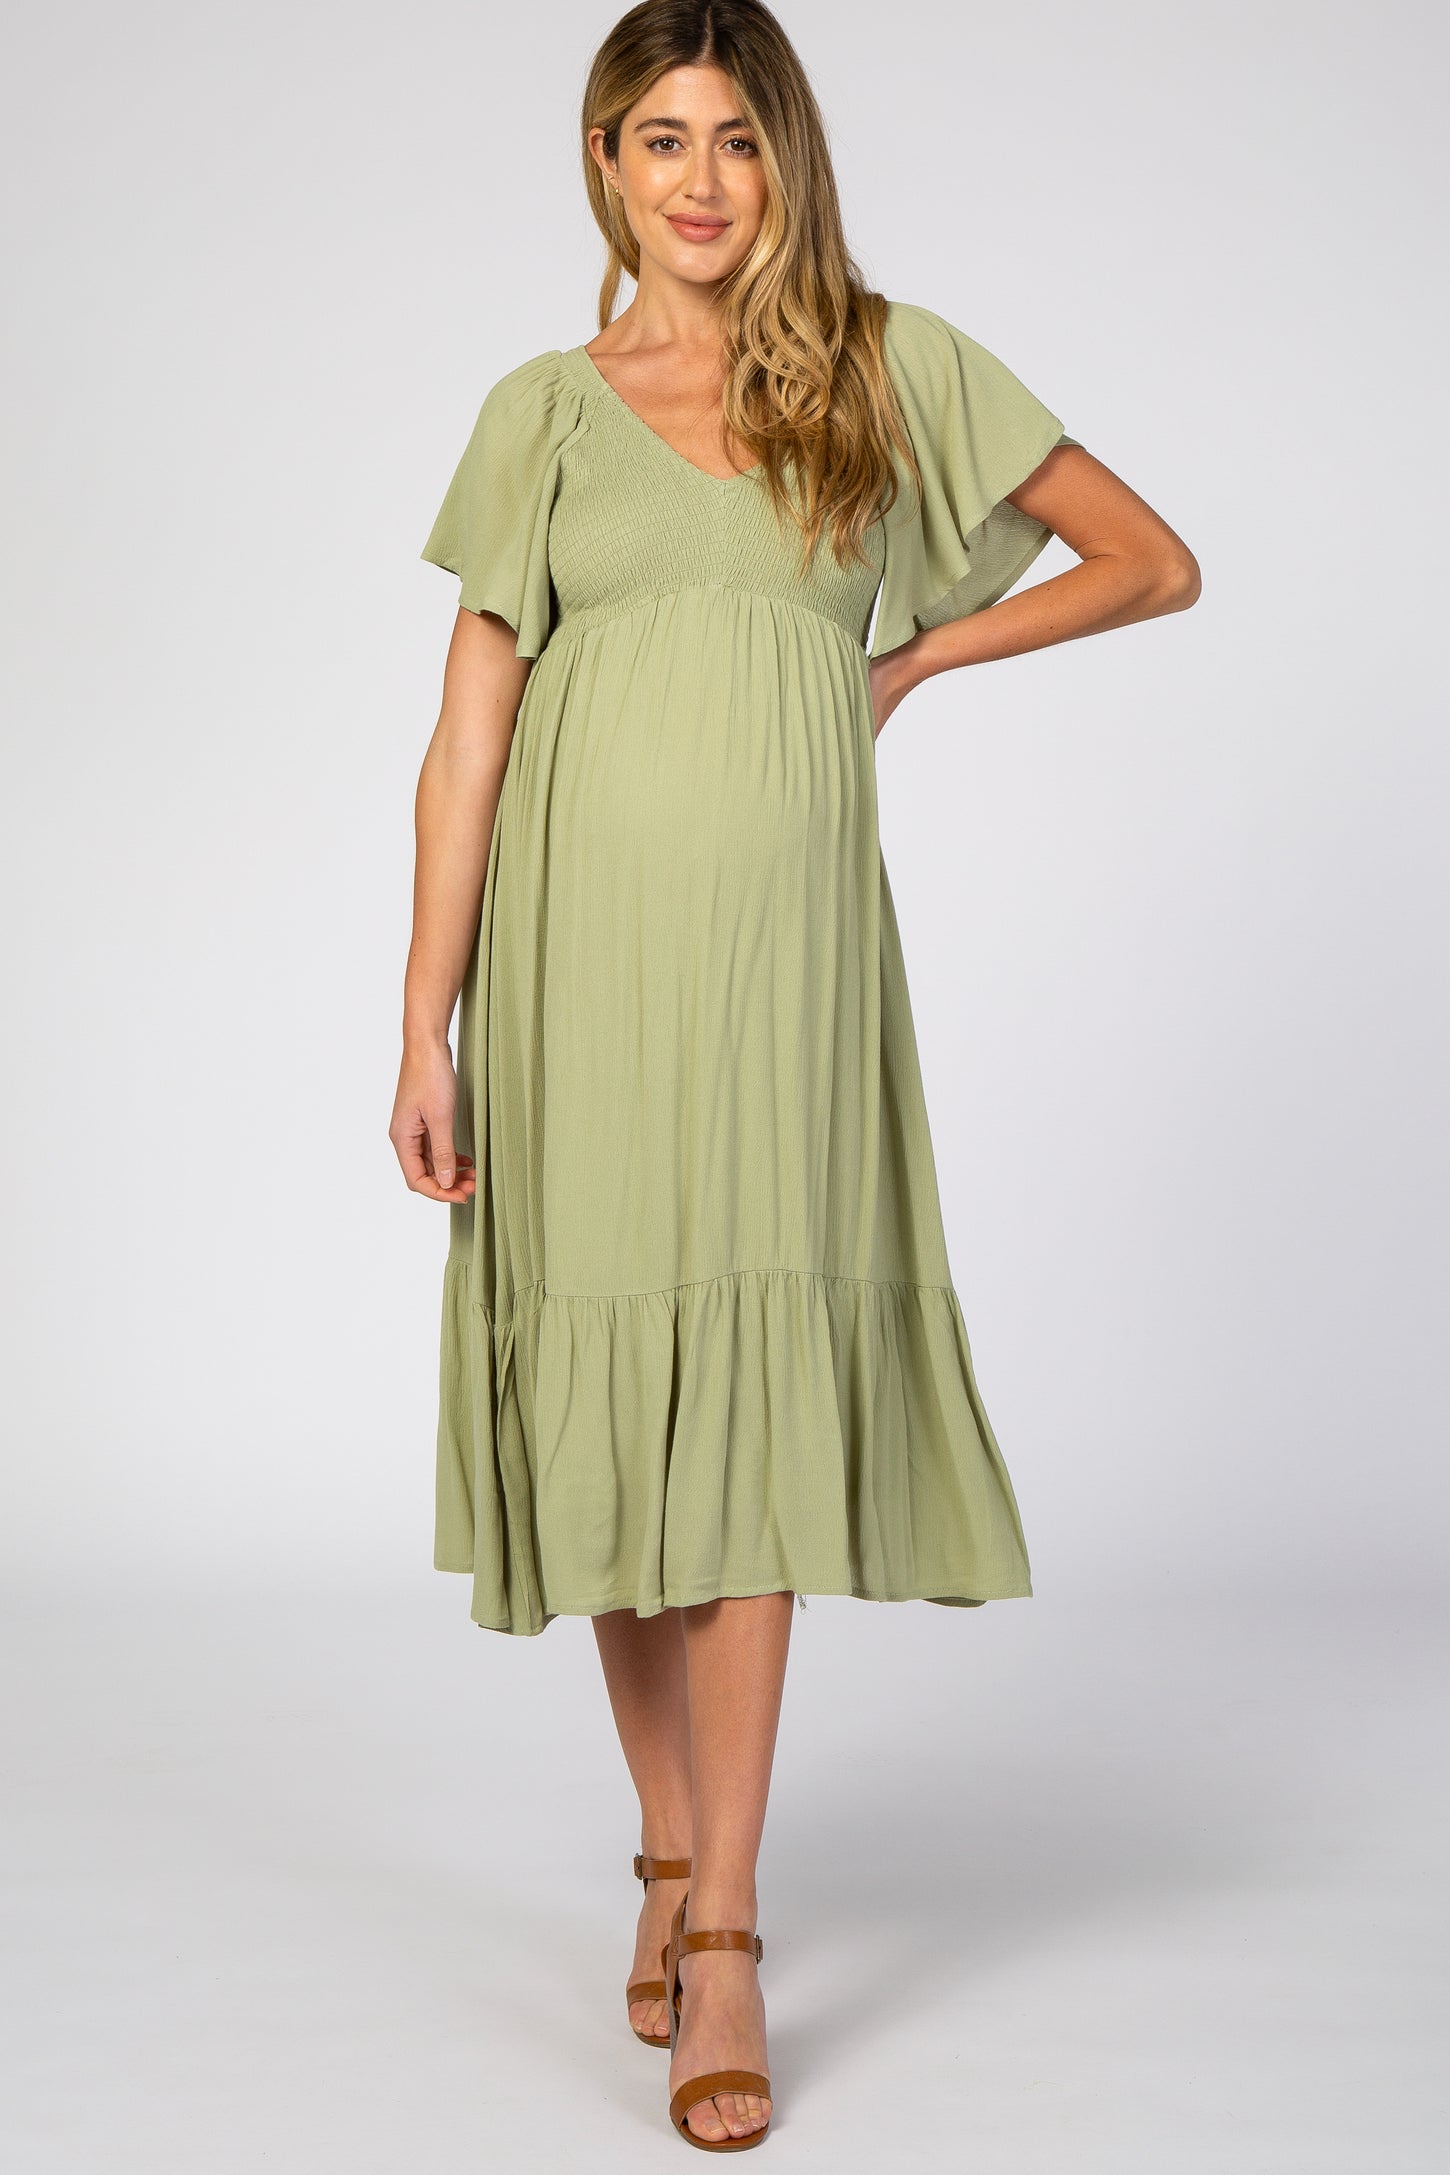 Light Olive Smocked Ruffle Maternity Dress– PinkBlush